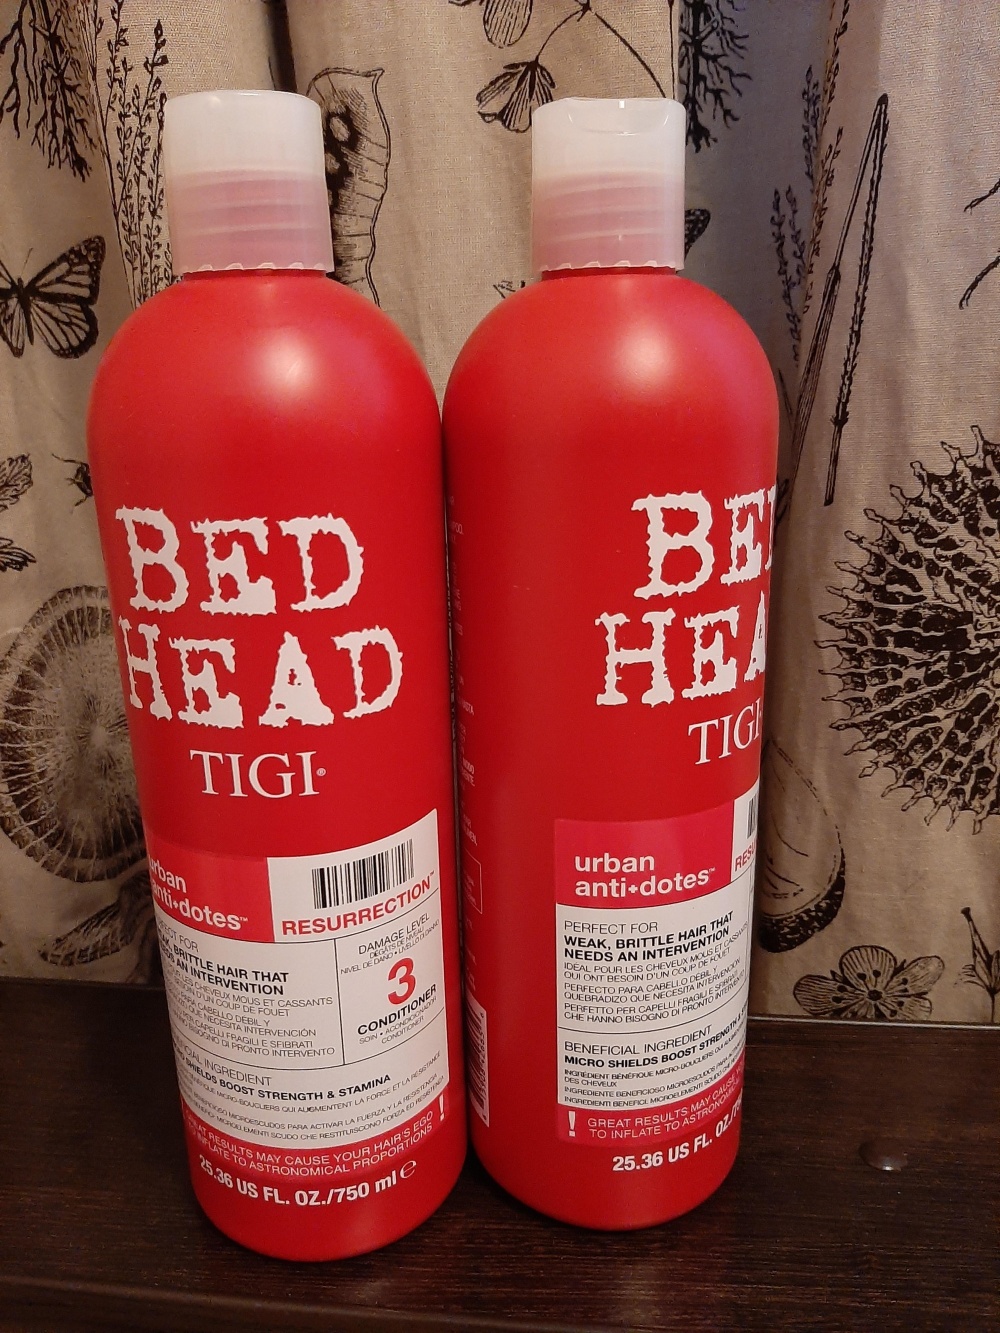 Набор TIGI URBAN ANTI-DOTES Resurrection shampoo and conditioner 2 х 750 ml